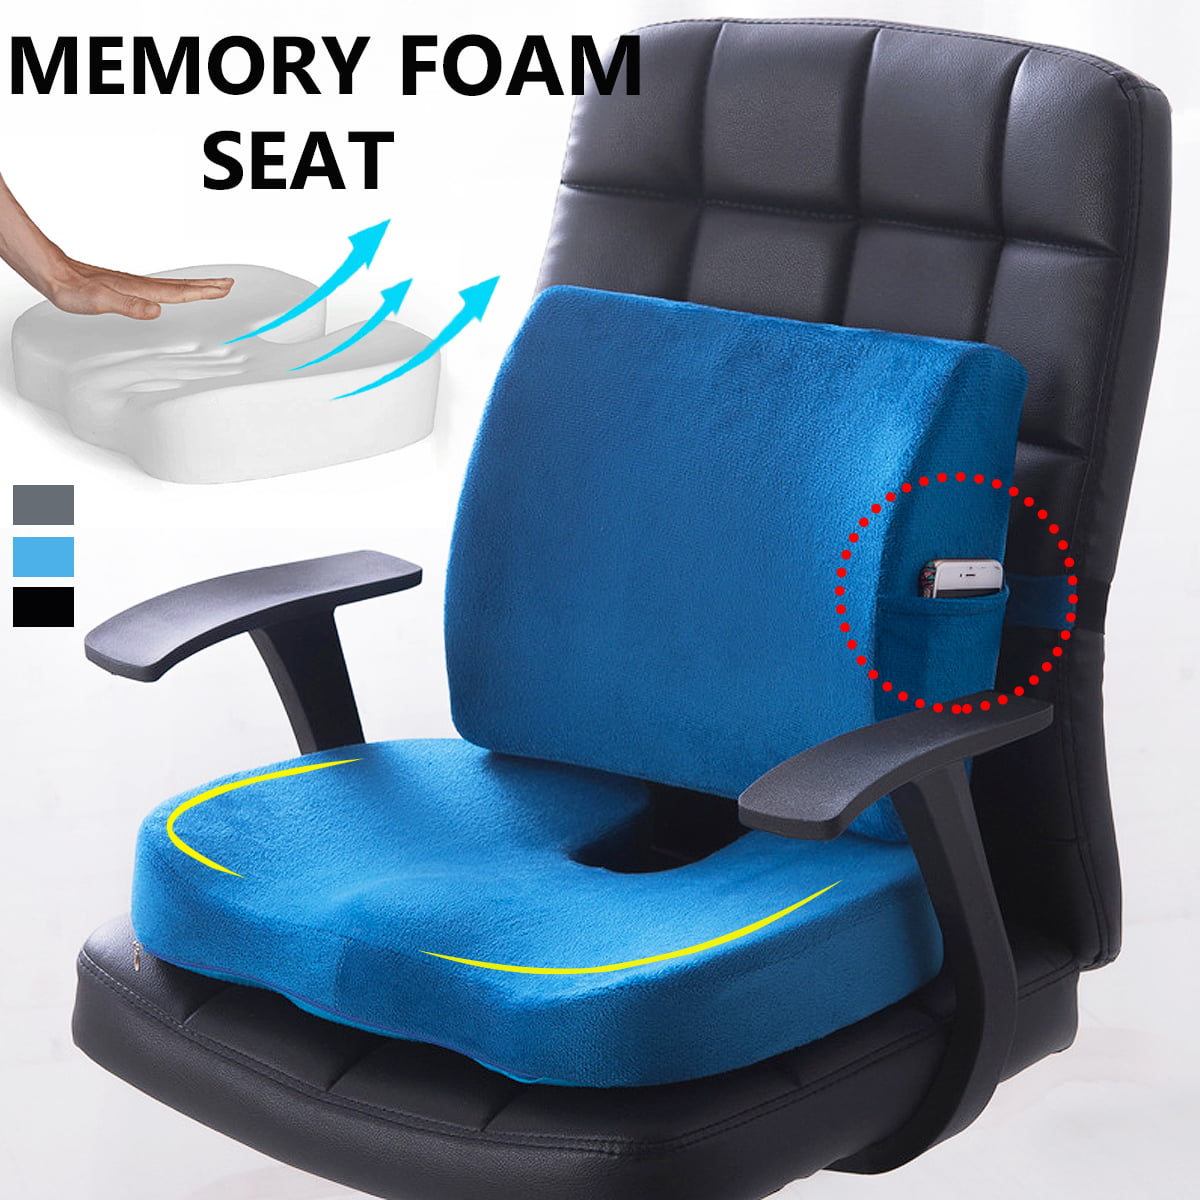 foam seat pads near me